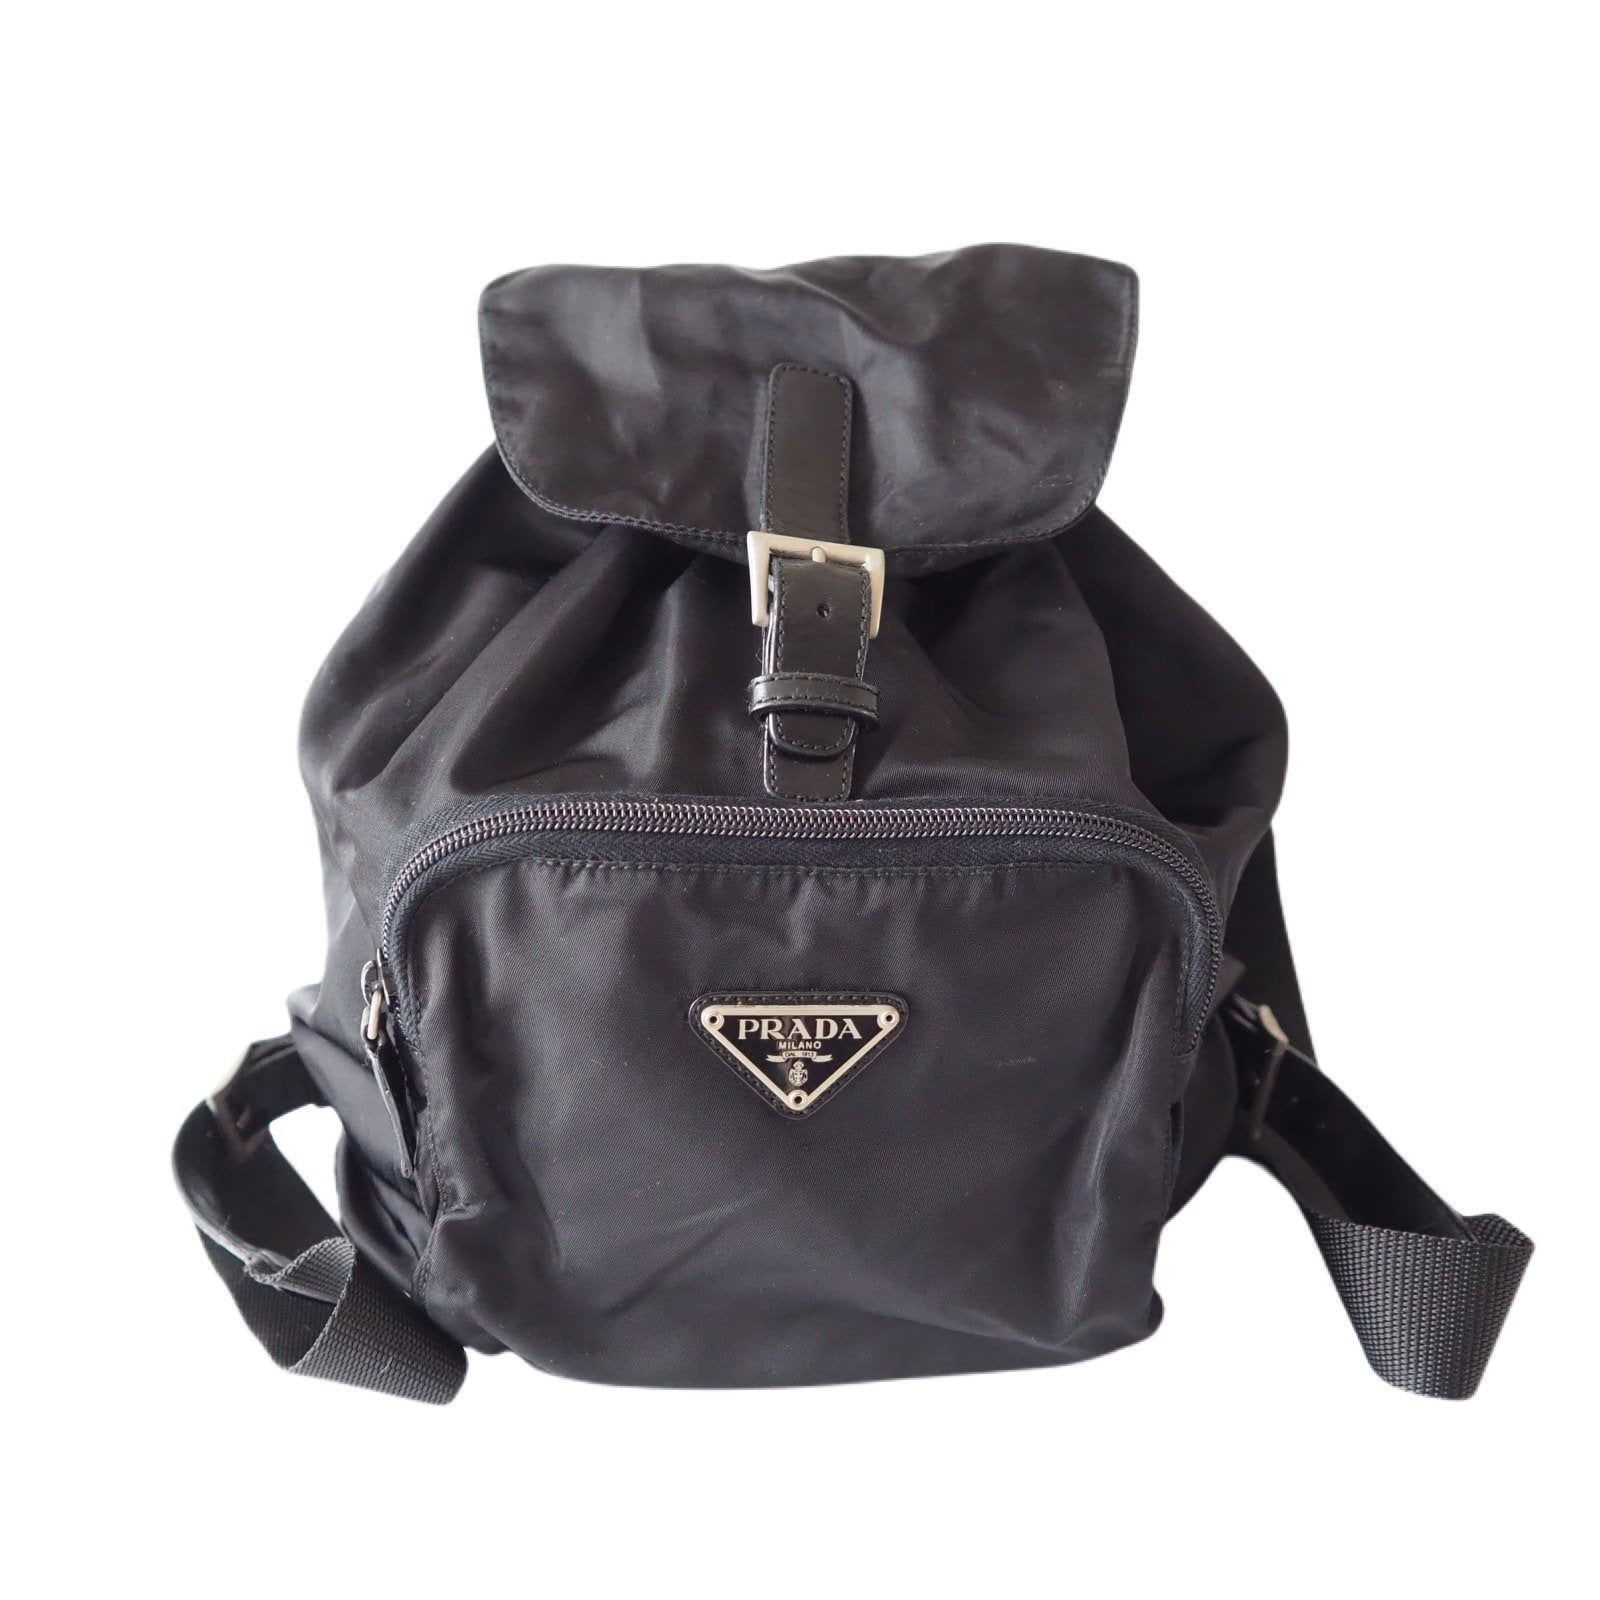 PRADA Nylon Leather Backpack Bag Black Logo Purse Authentic